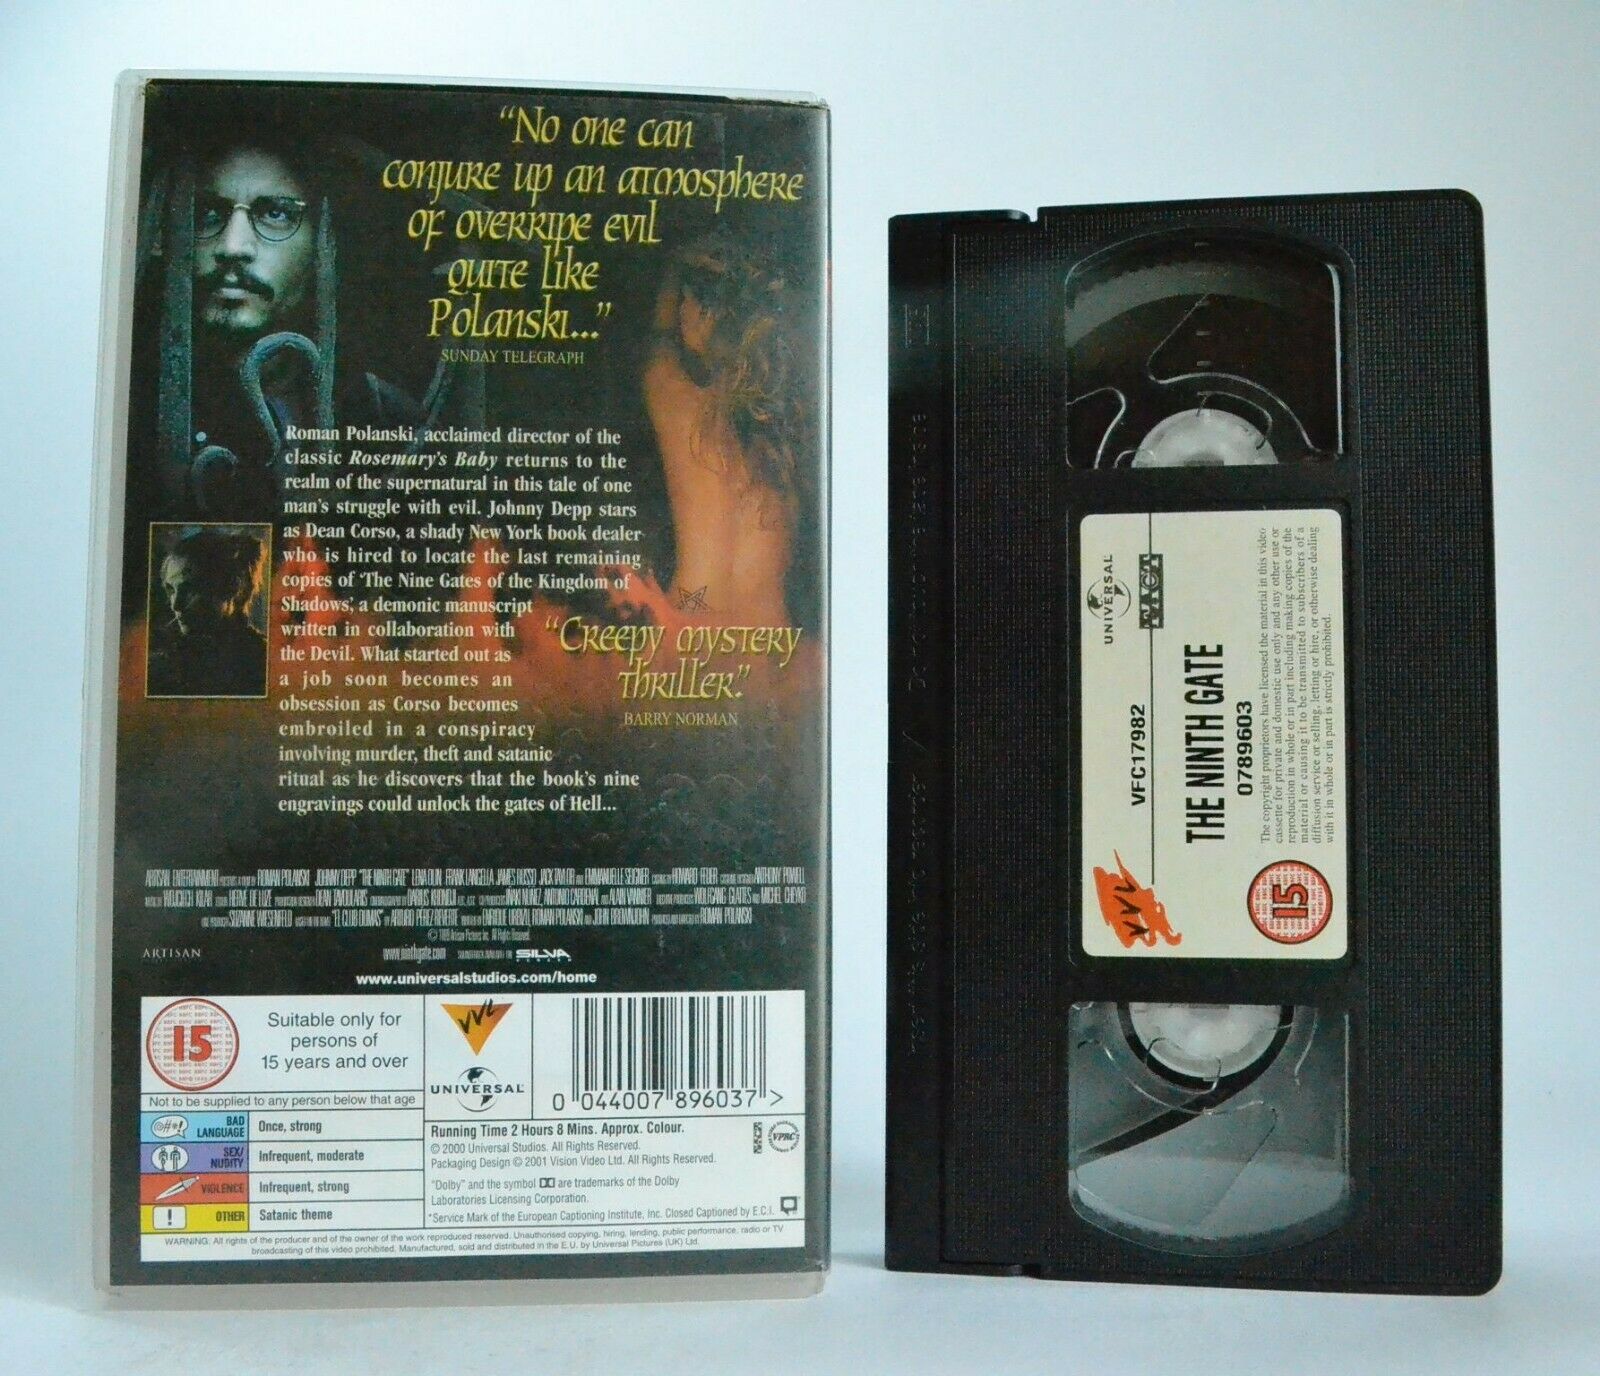 The Ninth Gate: R.Polanski Film (1997) - Thriller - Devil Book - J.Depp - VHS-